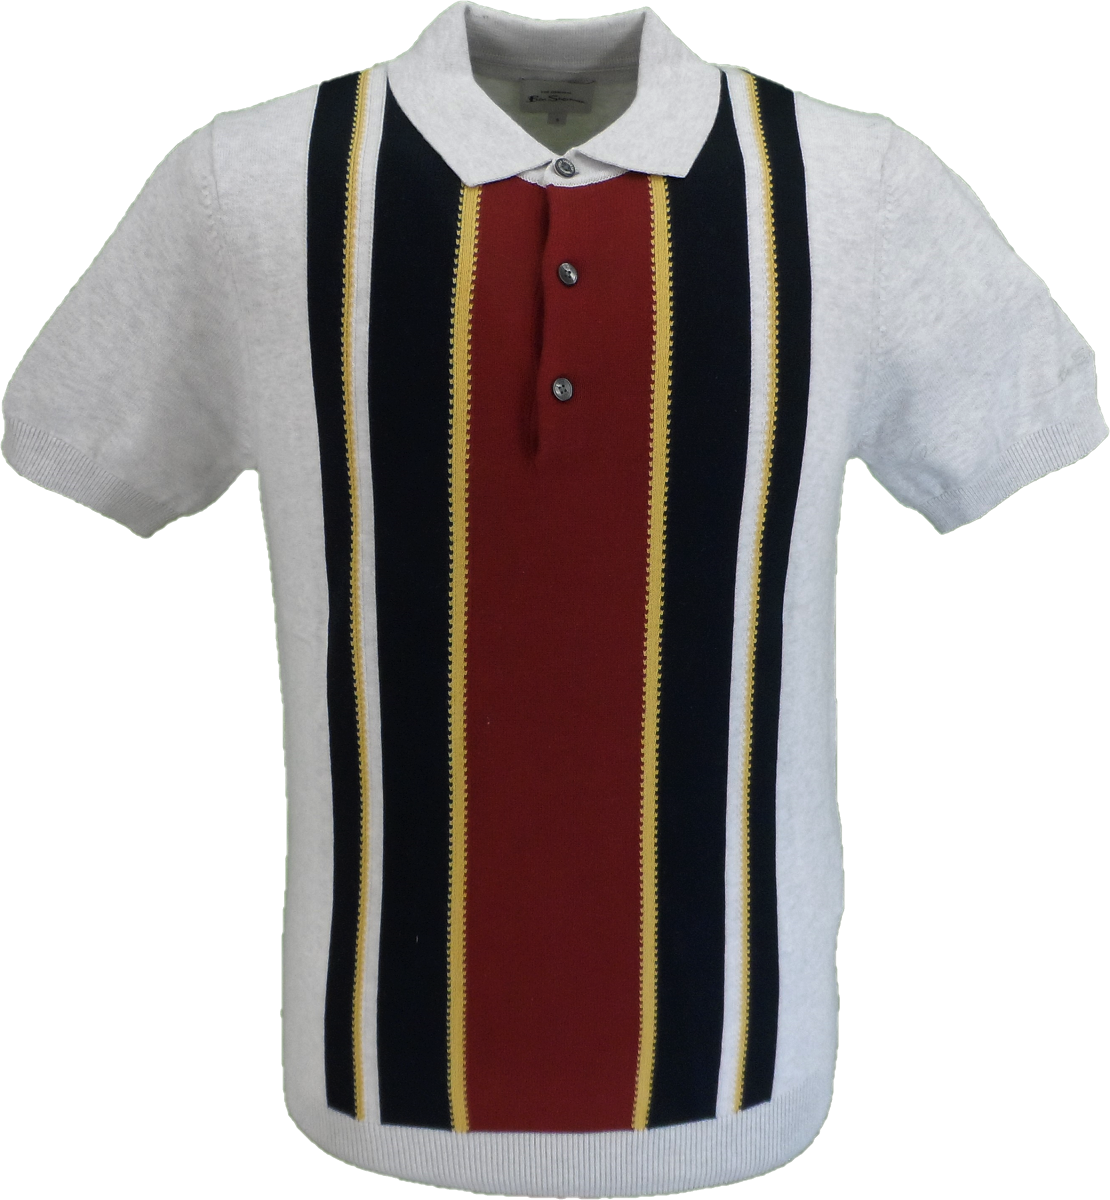 Ben Sherman Ivory Knitted Striped Mod Polo Shirt